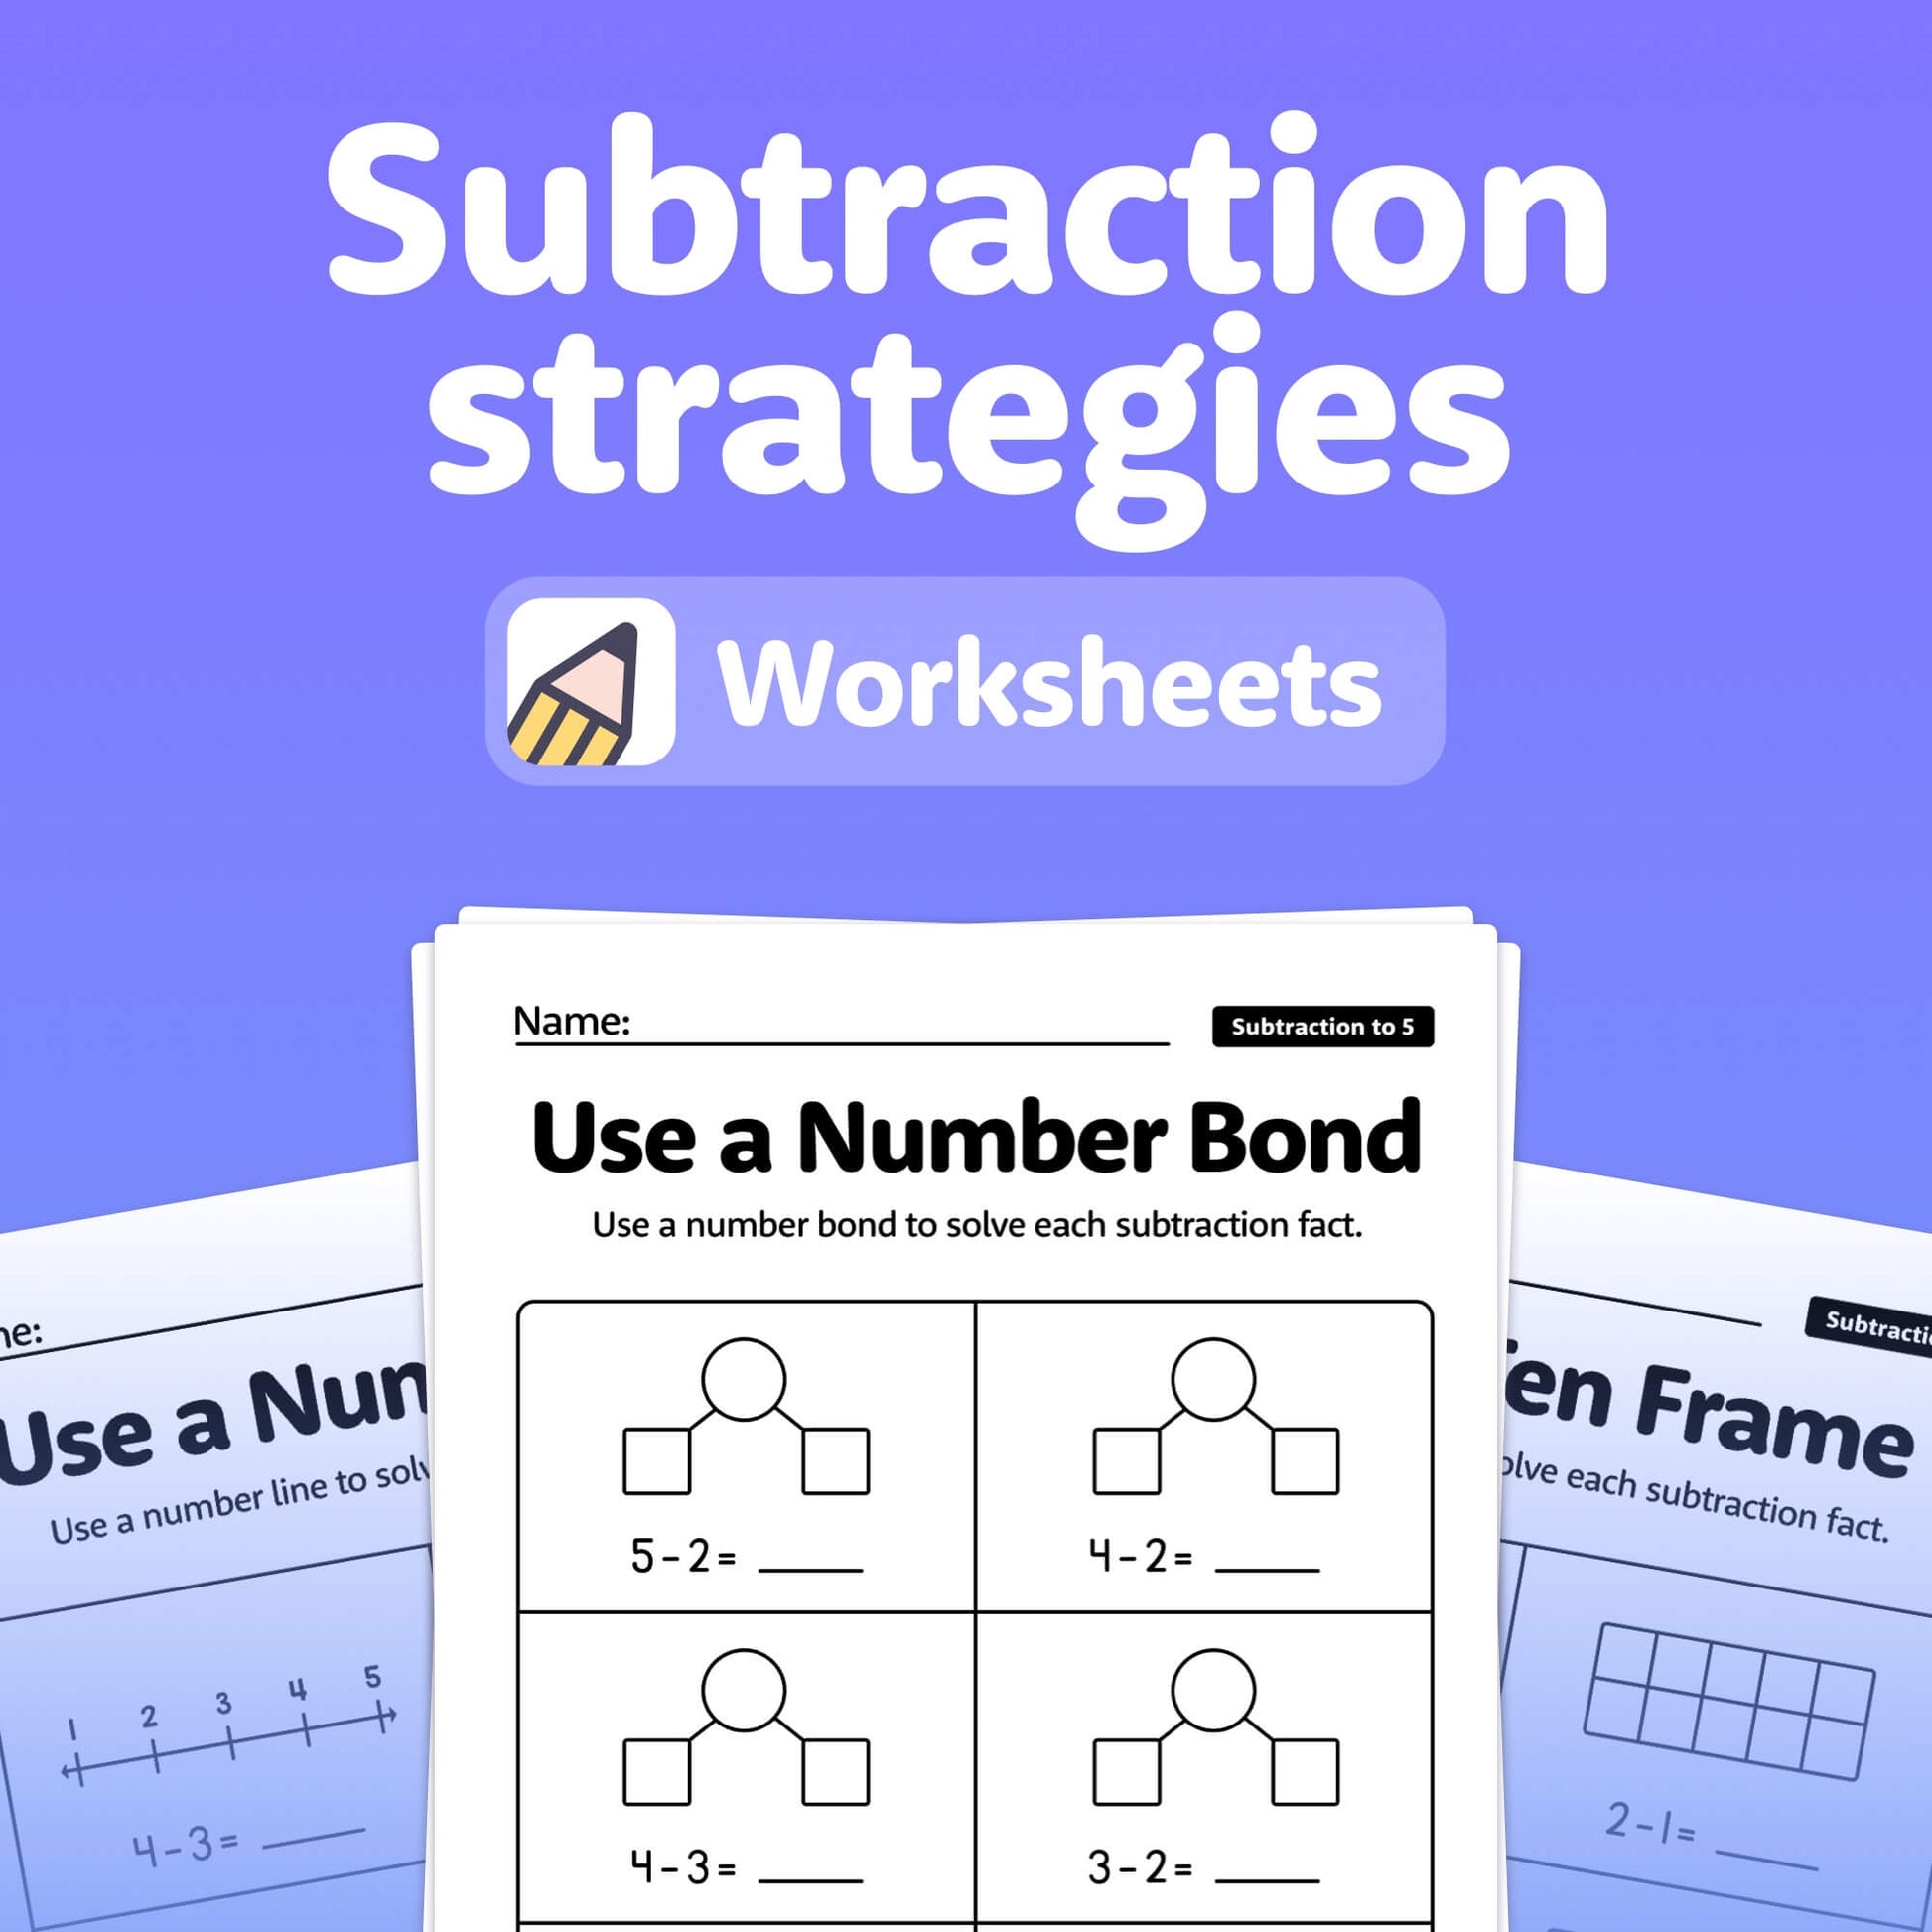 Subtraction strategies worksheets